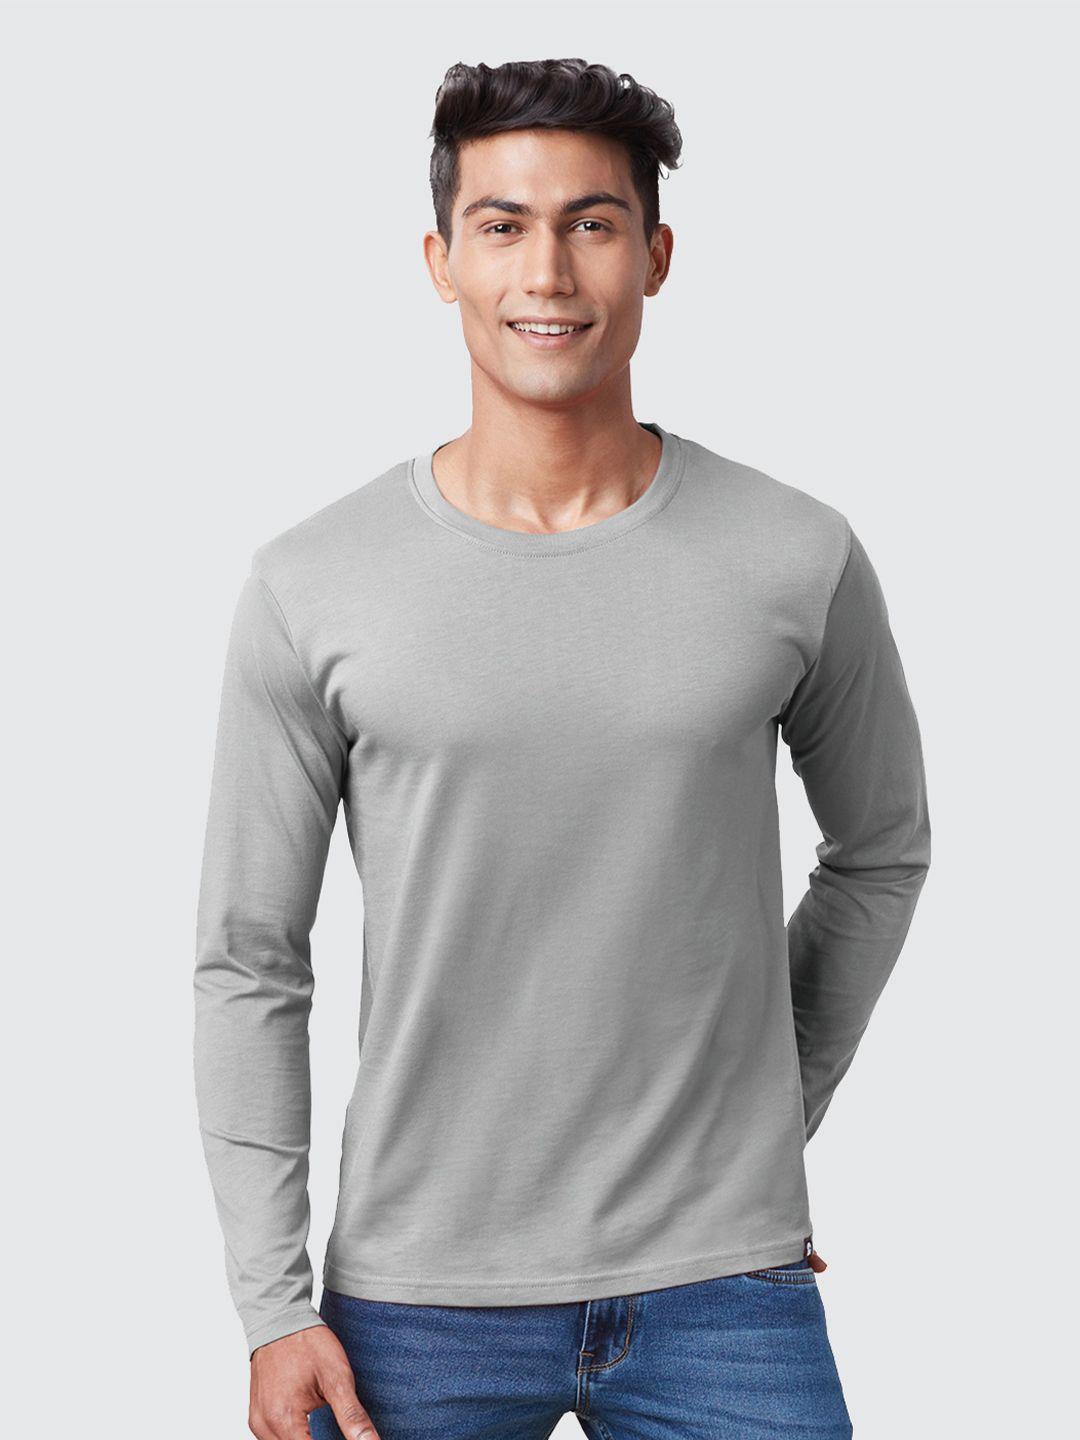 the souled store men grey t-shirt